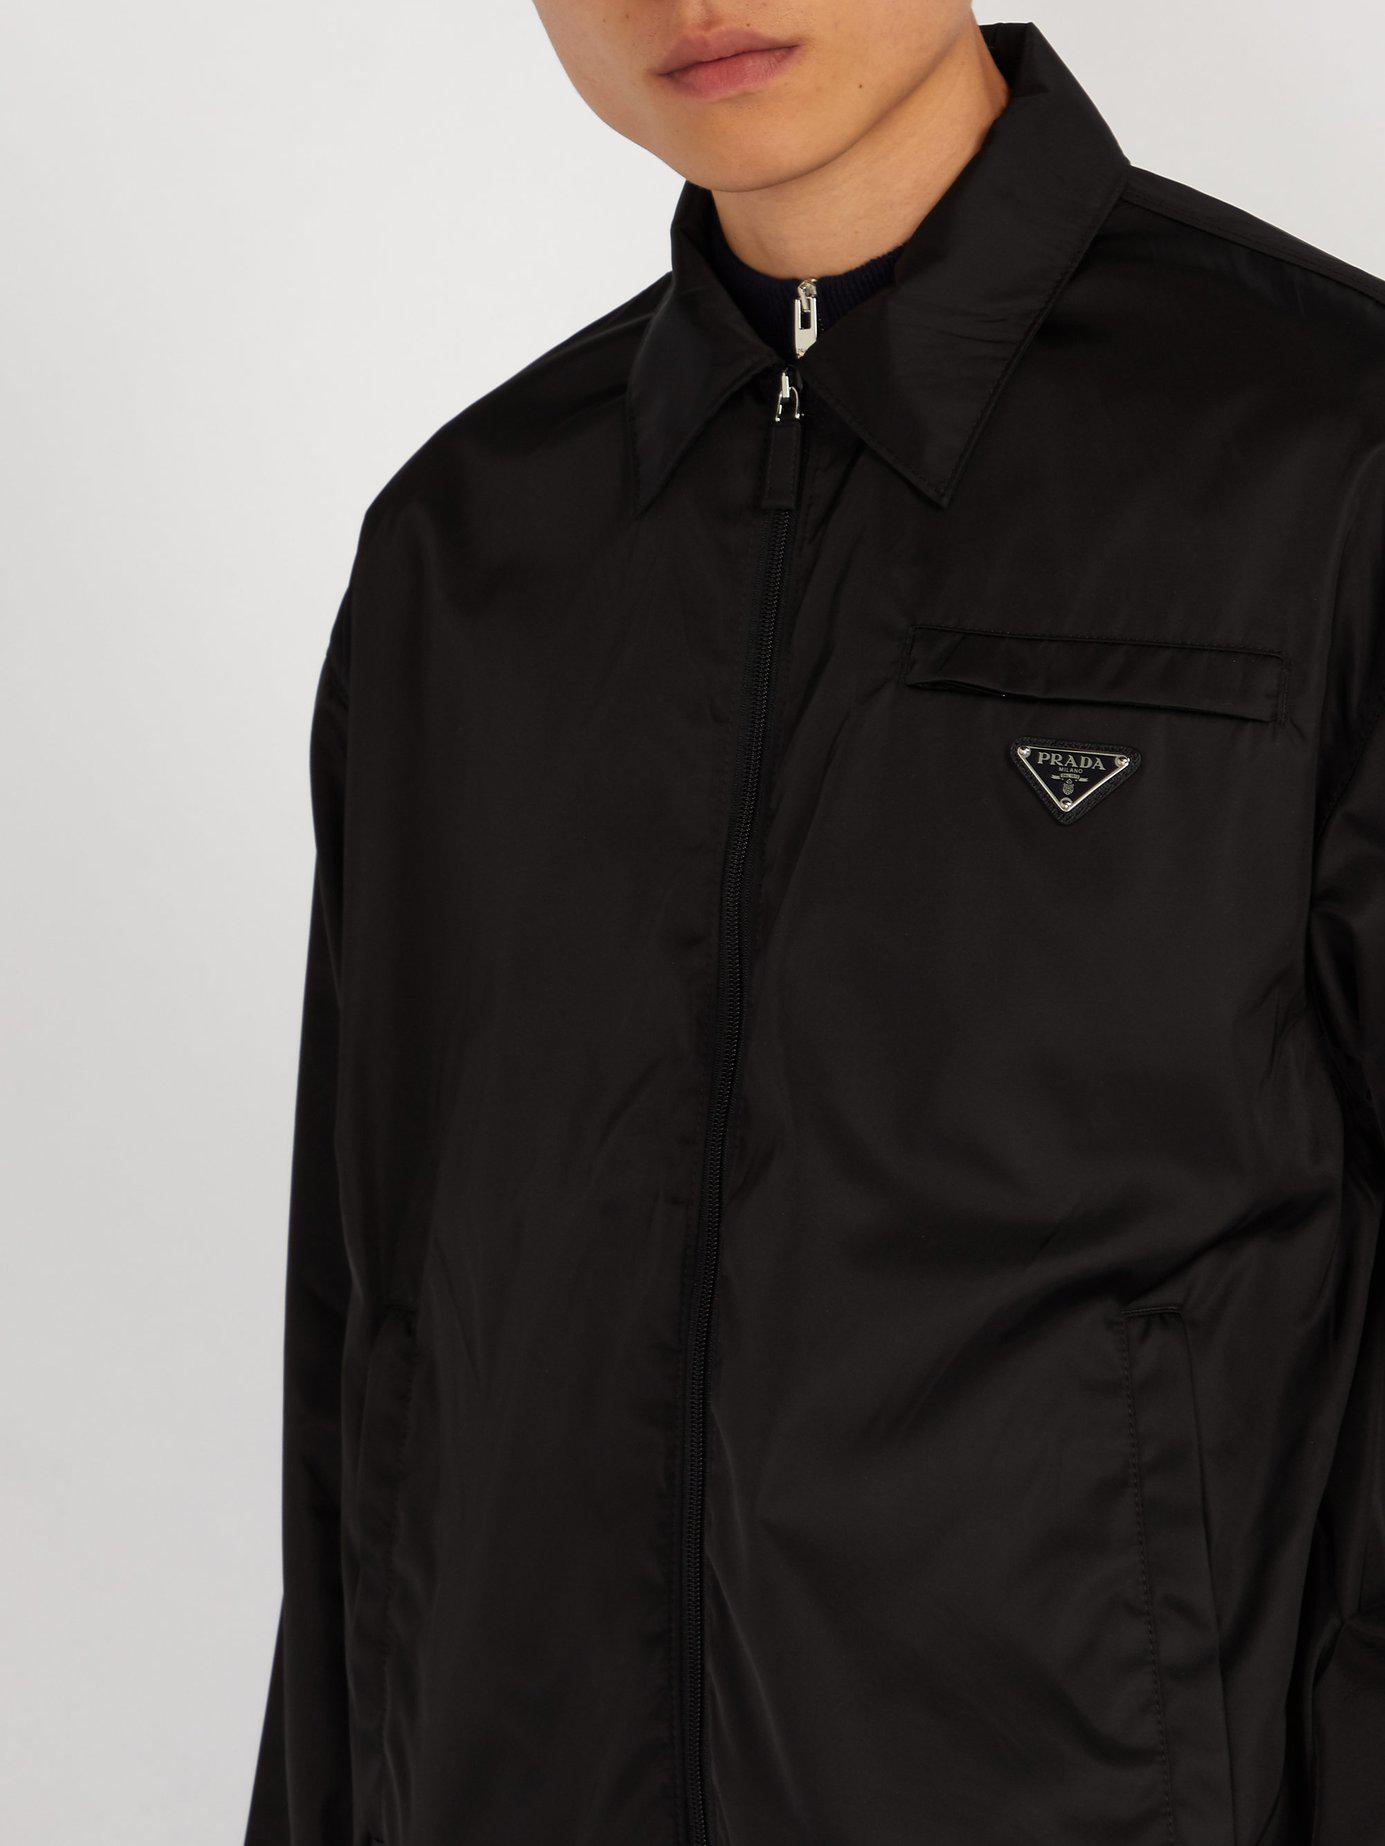 Prada Lightweight Nylon Coach Jacket in Black for Men | Lyst